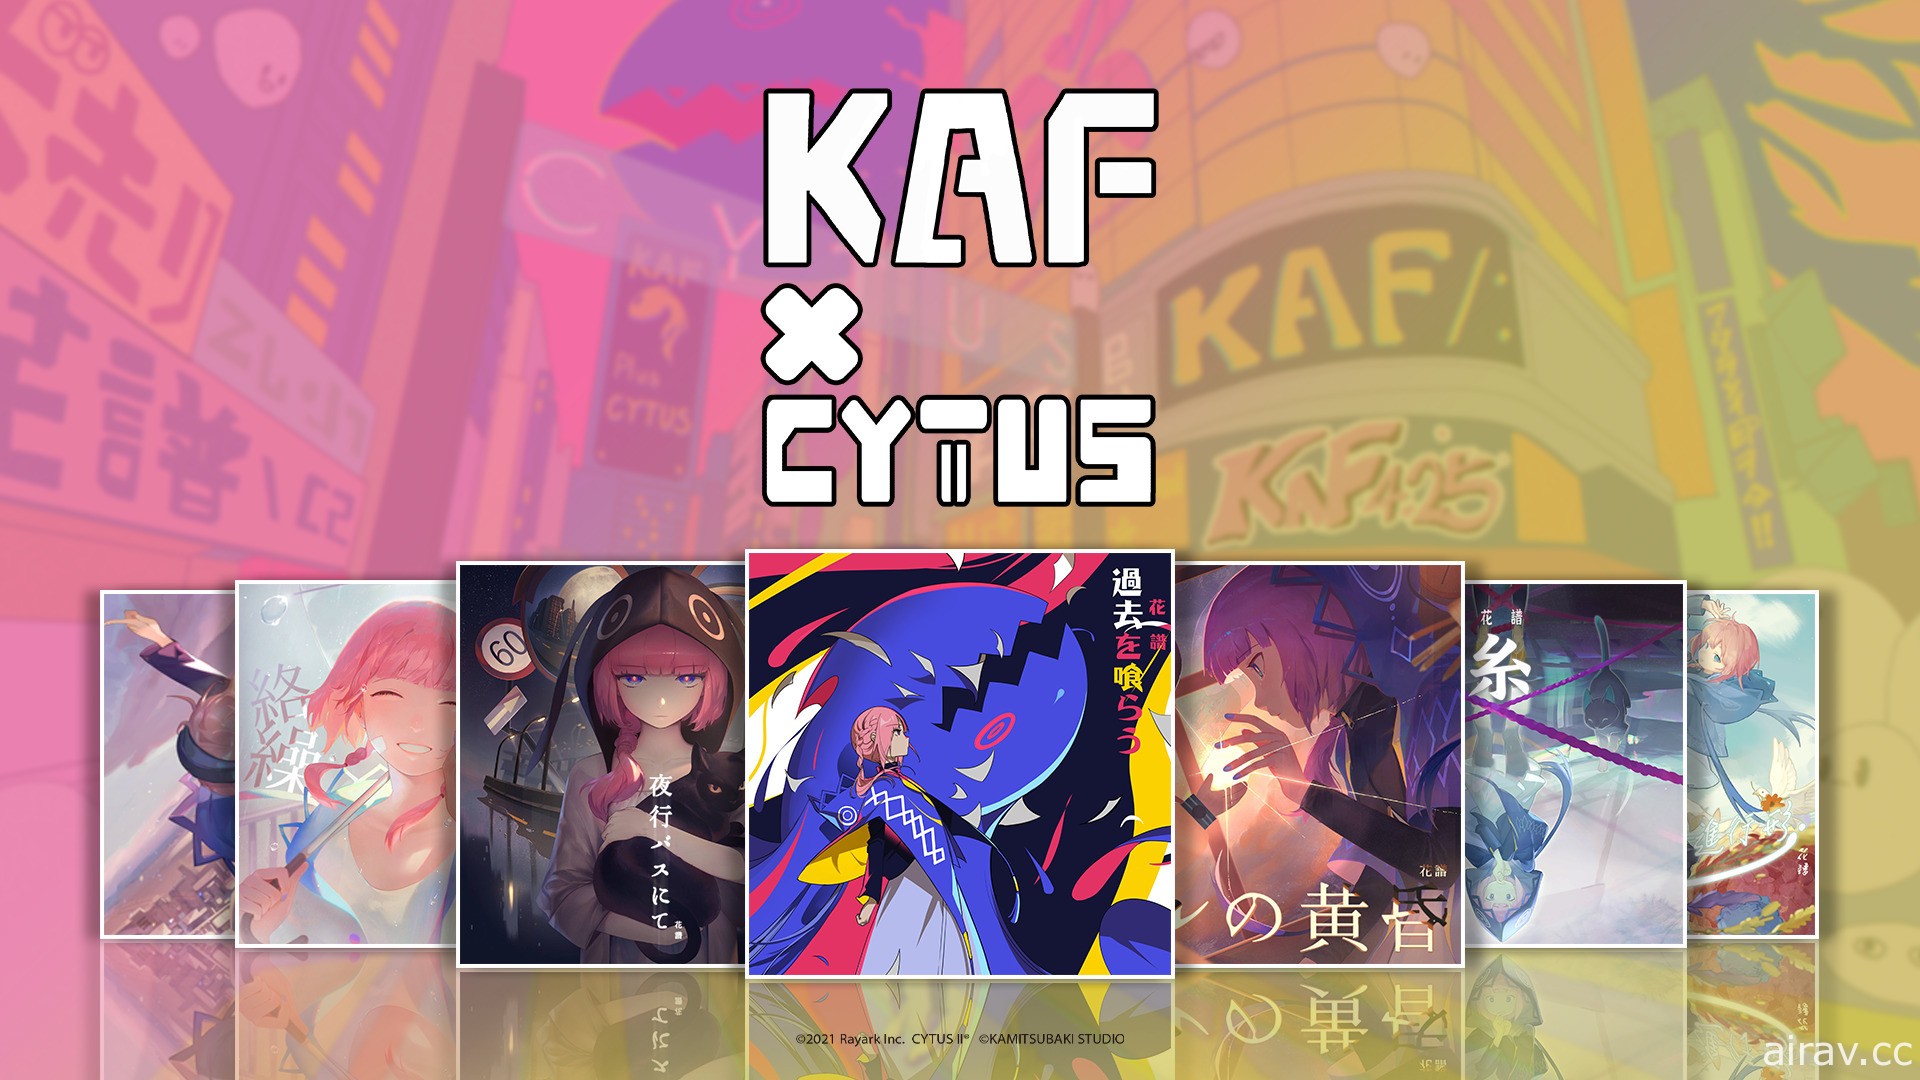 《Cytus II》4.2.5 版限时免费下载 推出虚拟 Youtuber 花谱合作角色“Kaf”